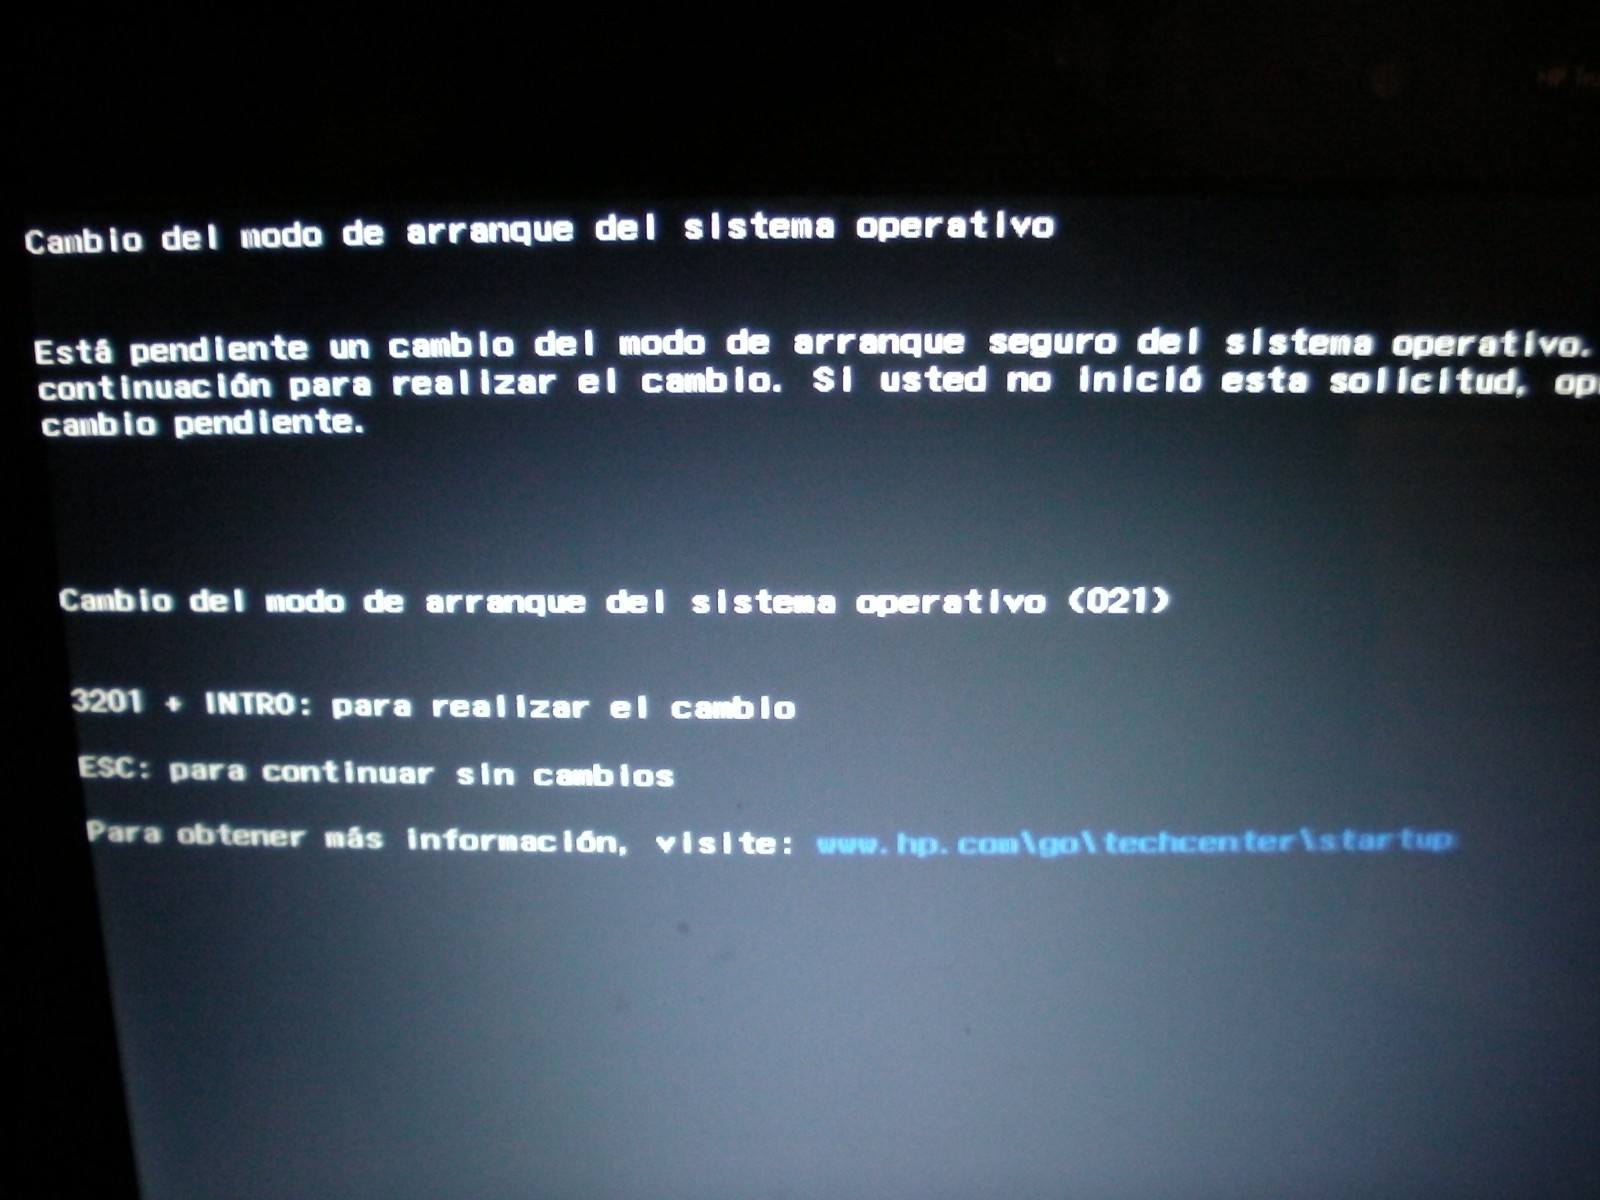 BIOS Error 03F0 on HP Pavilion dv6-6169us - HP Support Community - 2466233